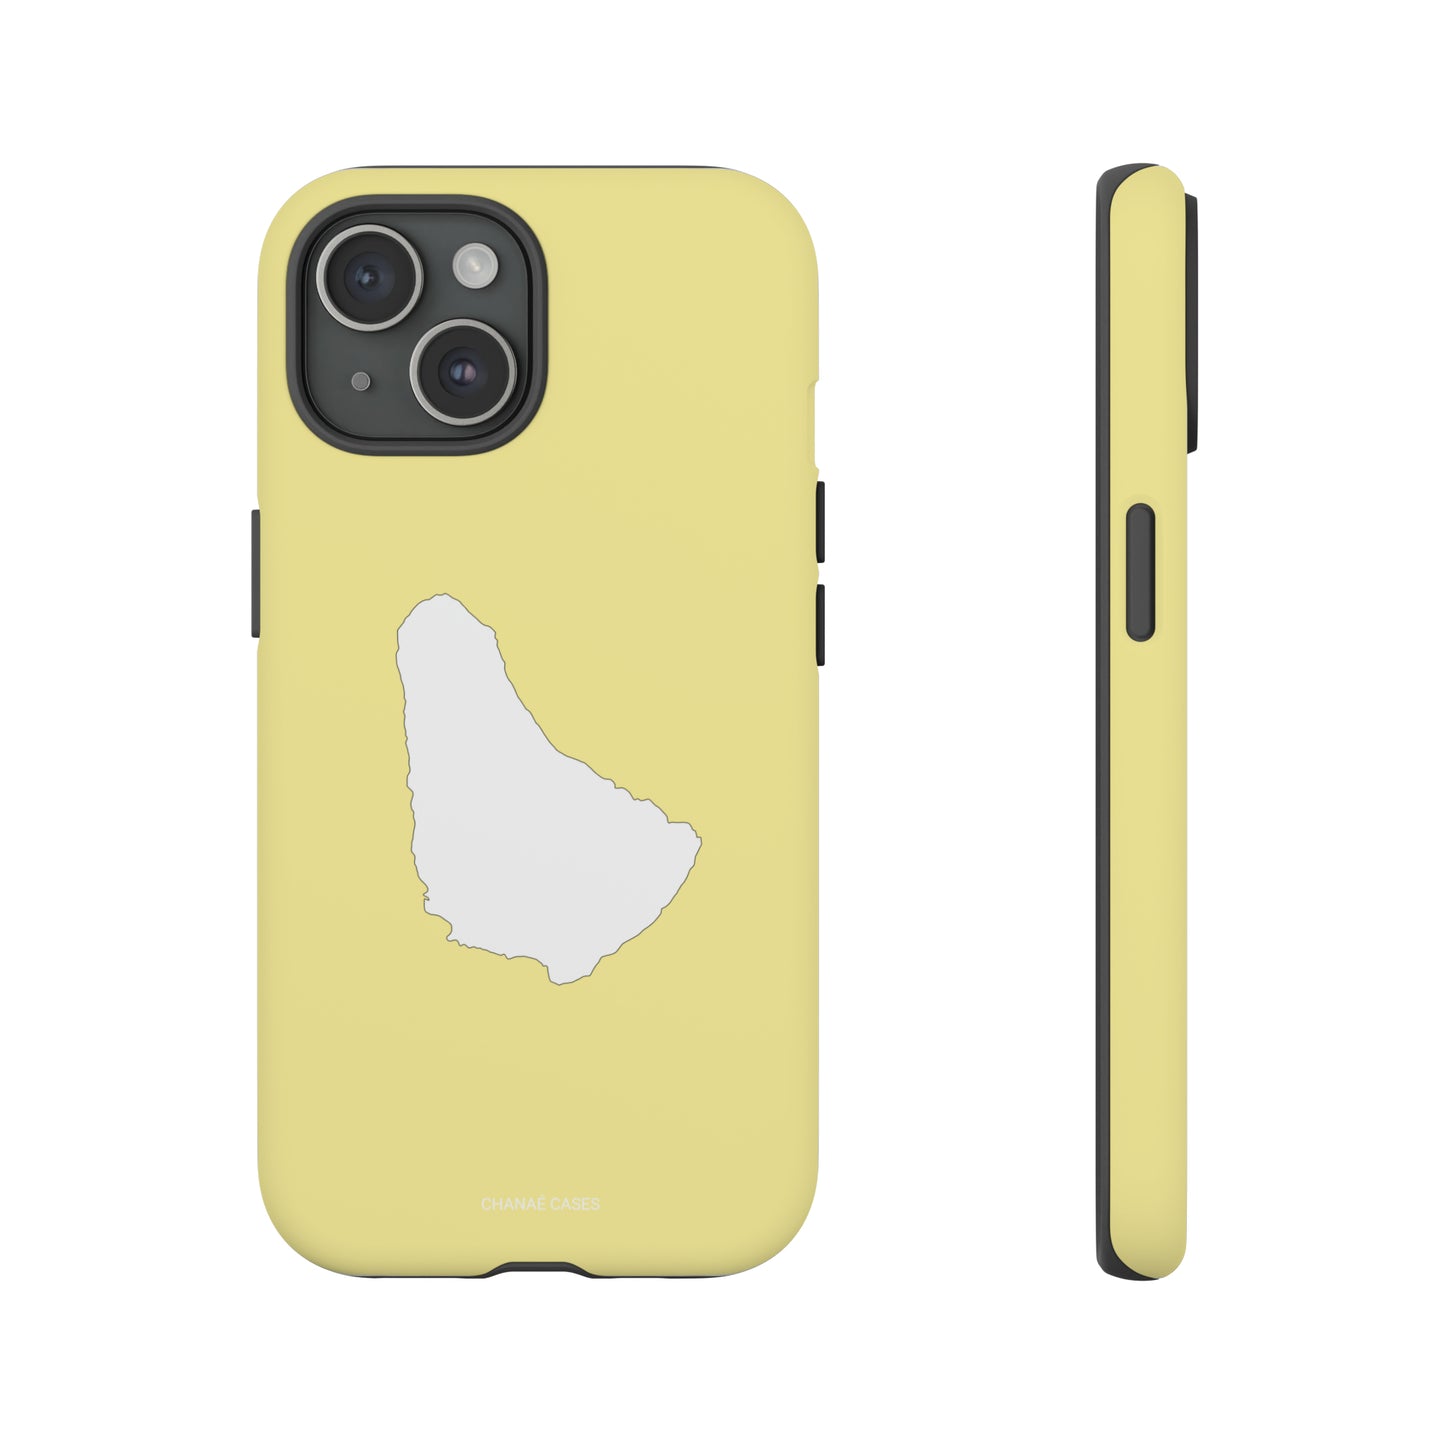 MOB iPhone "Tough" Case (Yellow)